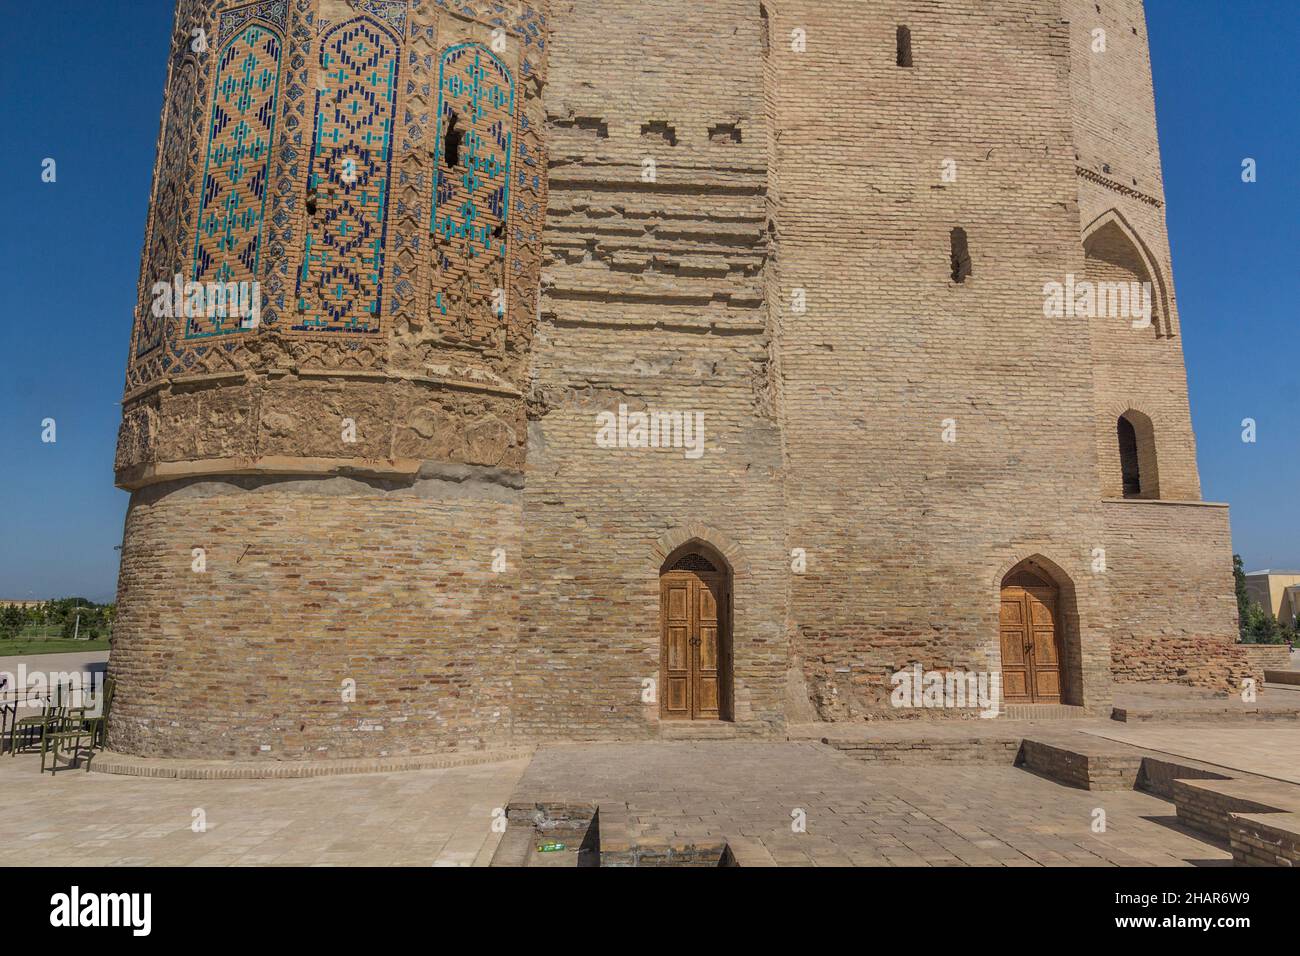 AK Saray palazzo rovine in Shahrisabz, Uzbekistan Foto Stock